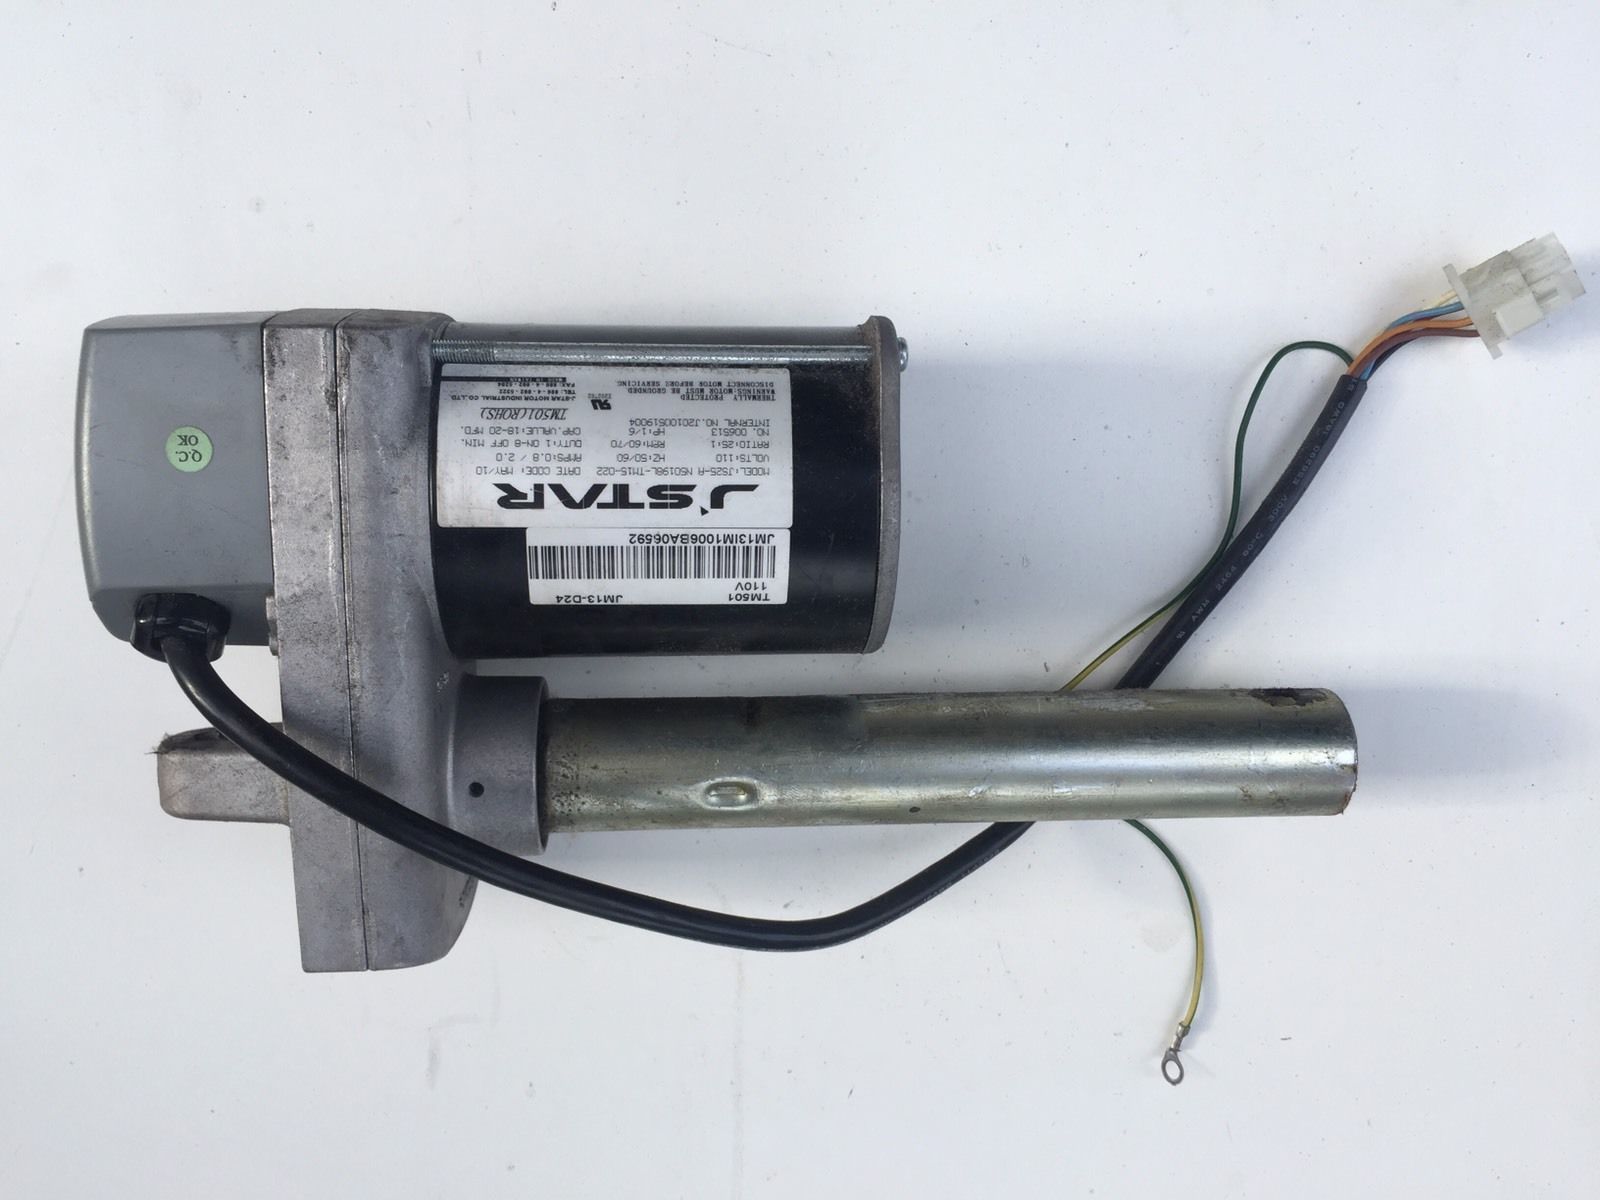 Incline Elevation Motor (Used)